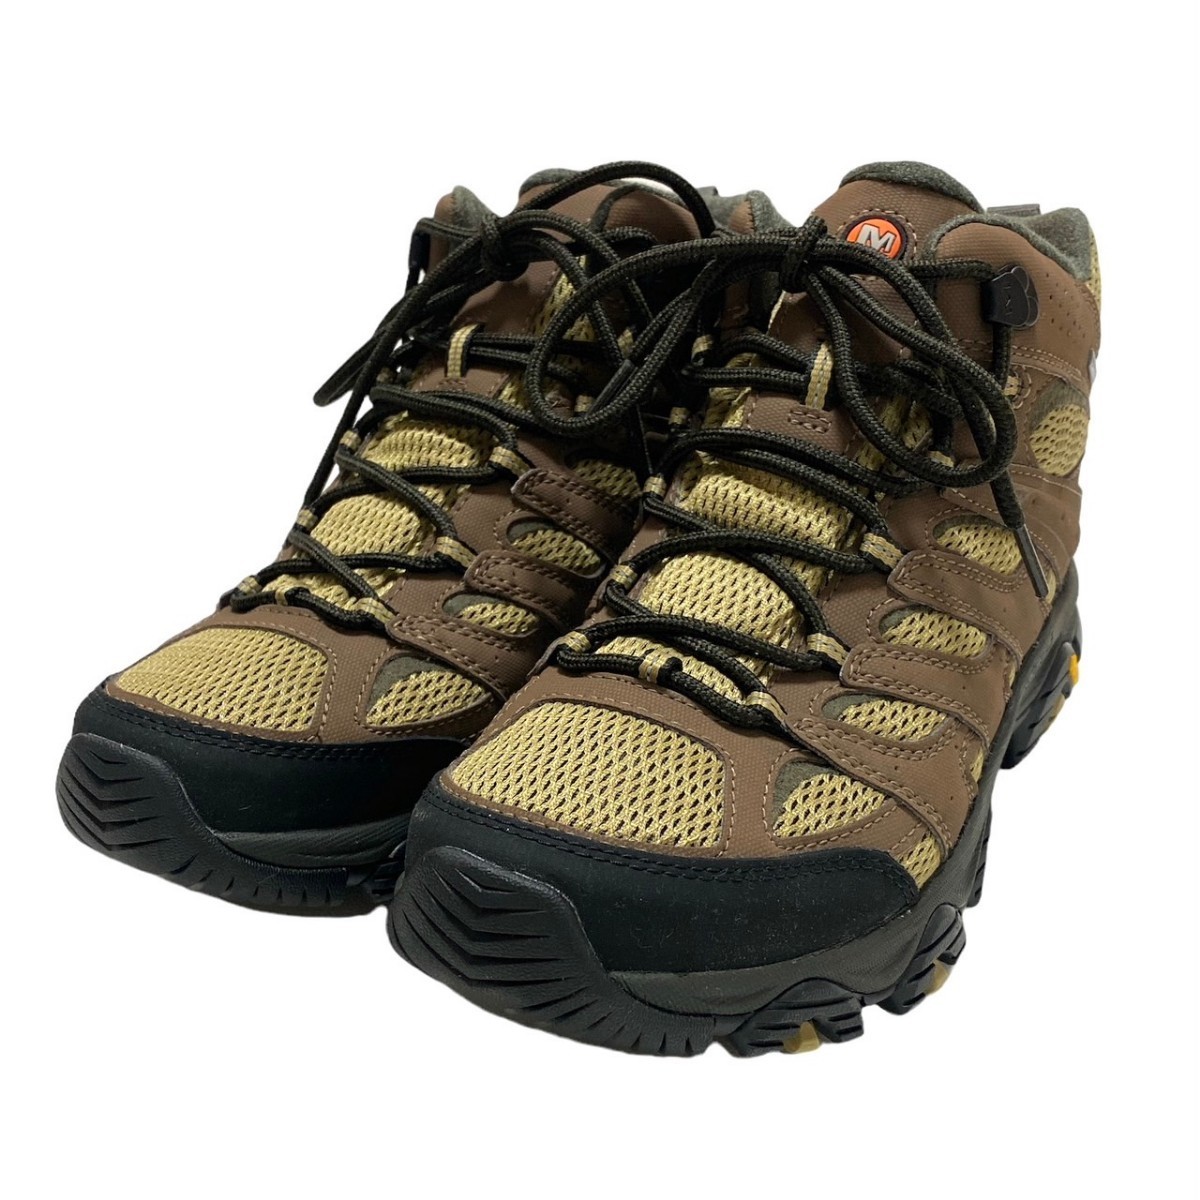  unused mereru high King shoes trekking shoes MOAB 3 SYN MID GTX J500255 Gore-Tex 27.5cm 24A14